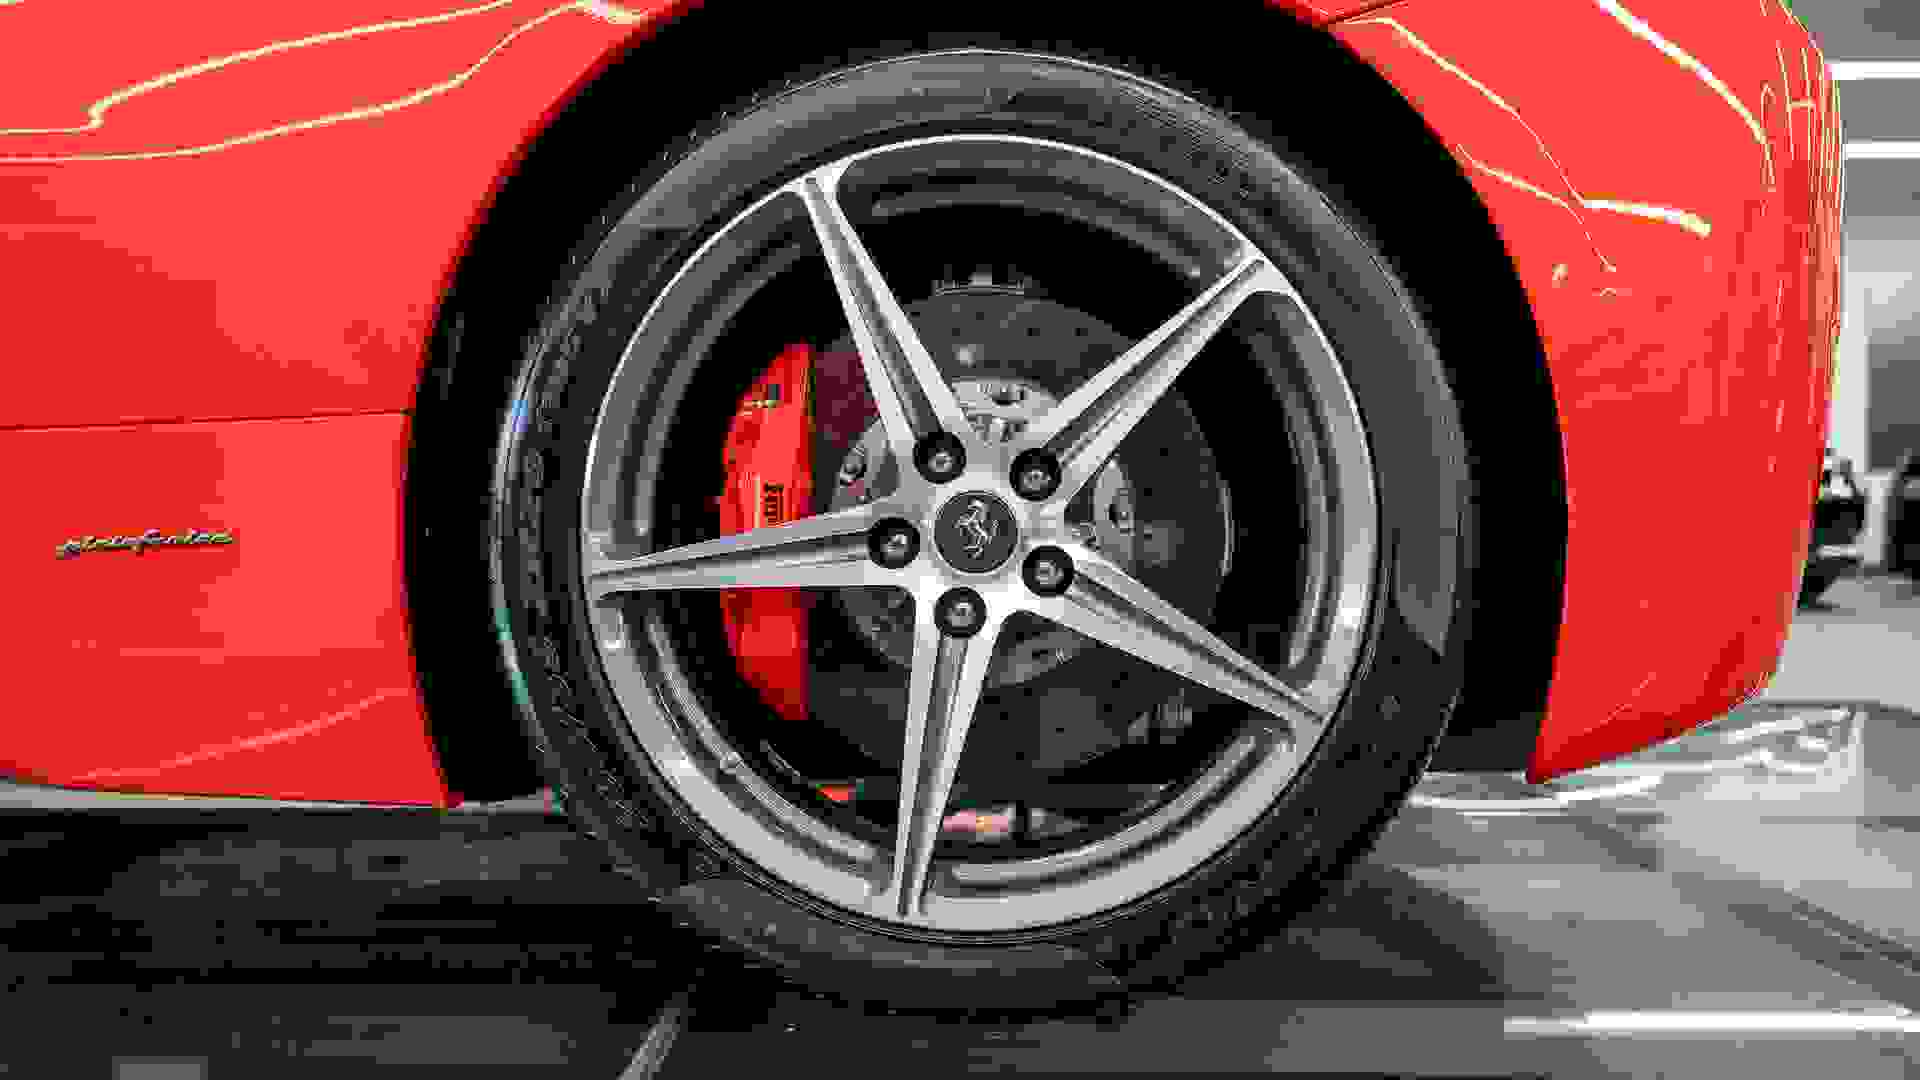 Ferrari 458 Photo e2be023c-770e-4818-a6cb-bf8e47c45898.jpg